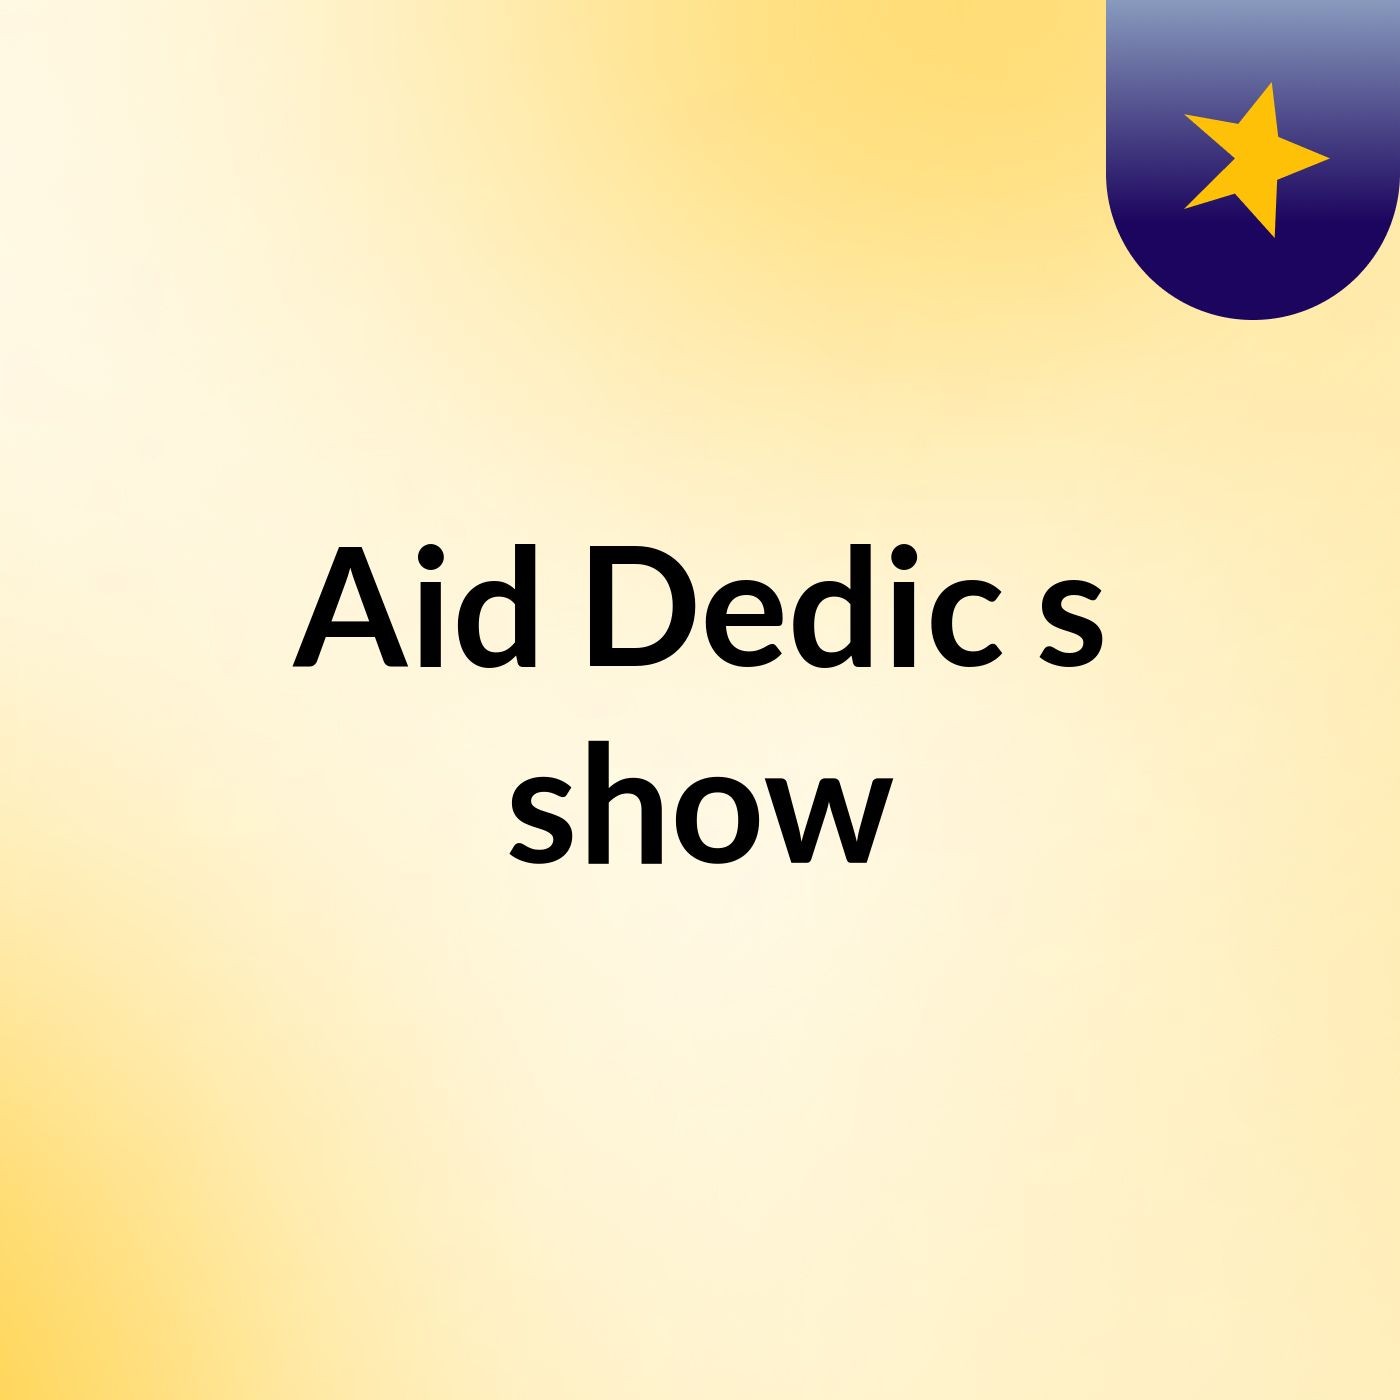 Aid Dedic's show